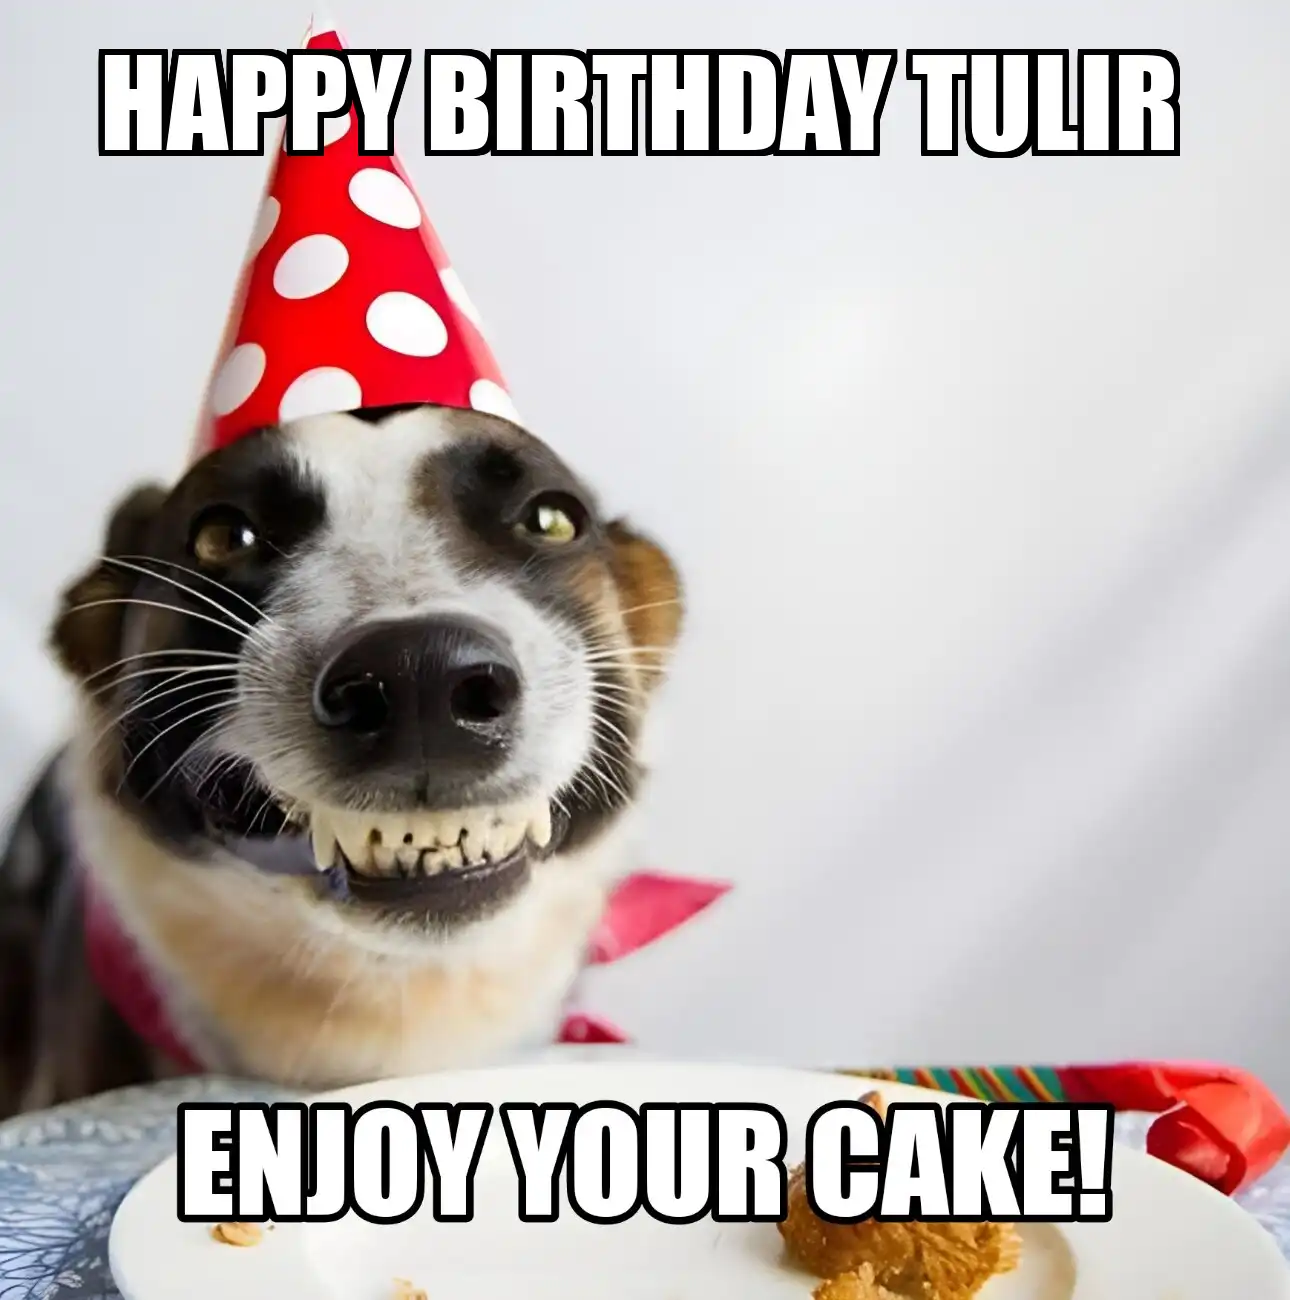 Happy Birthday Tulir Enjoy Your Cake Dog Meme